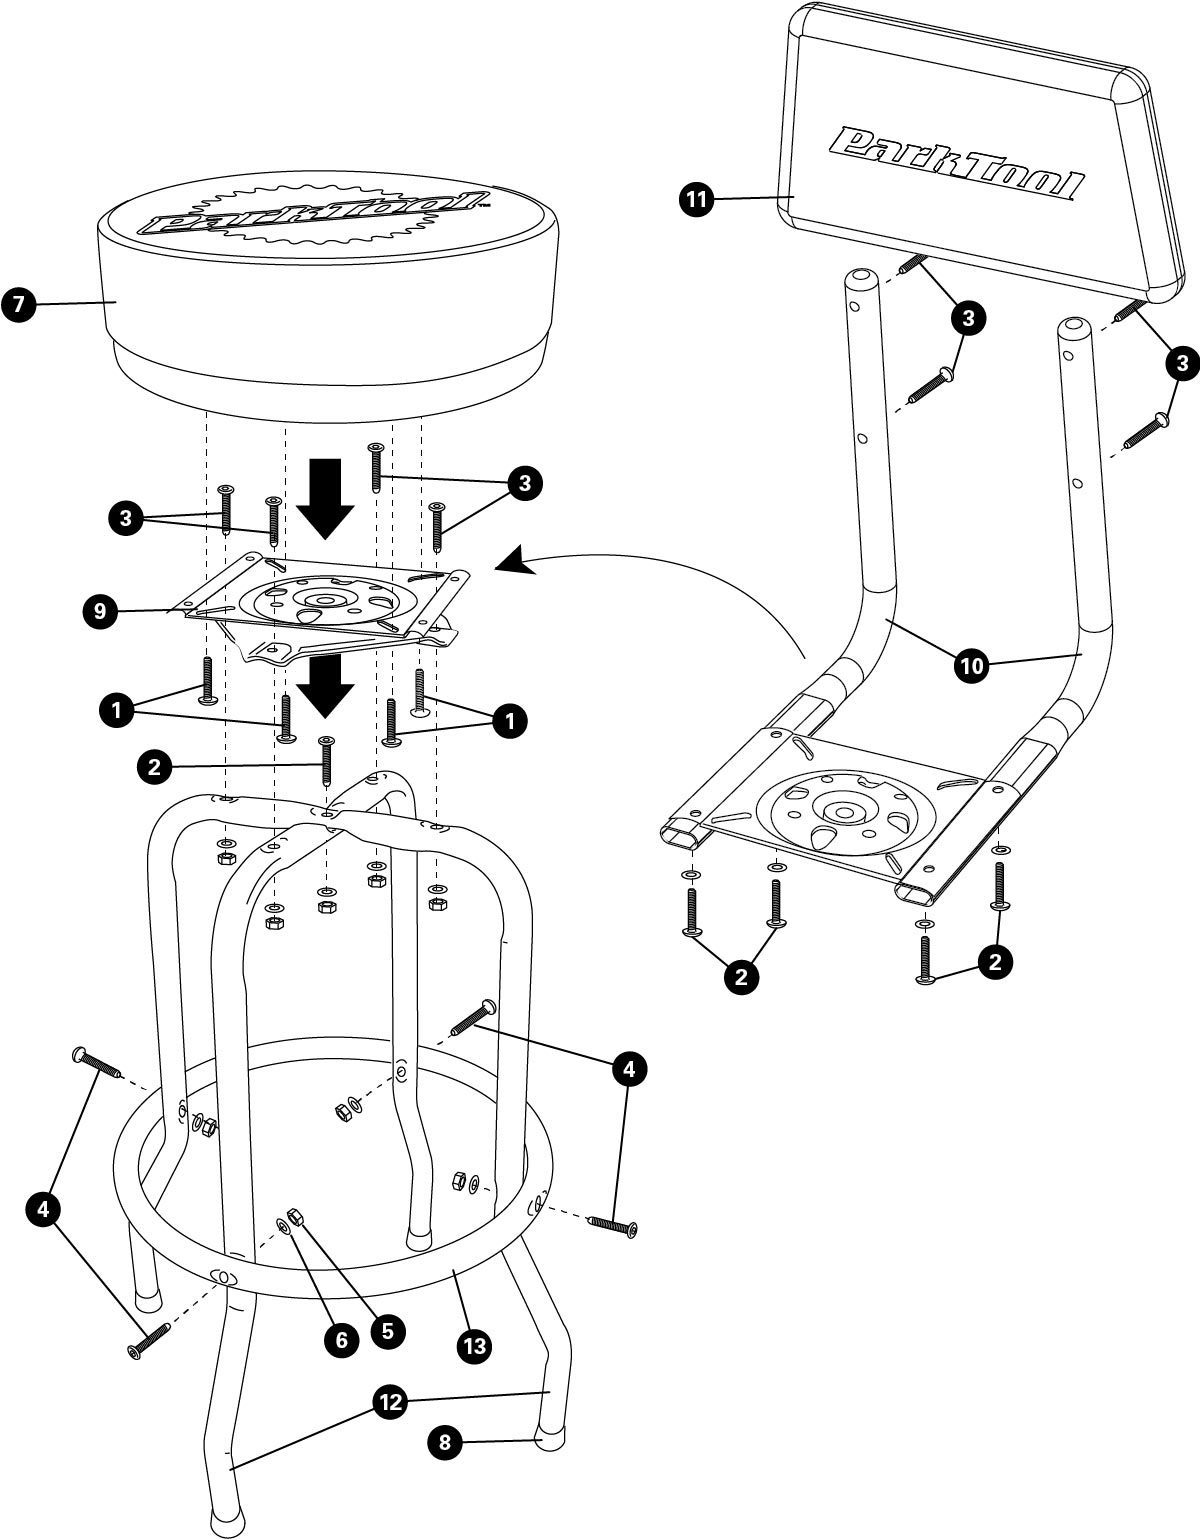 Parts diagram for STL-1 Shop Stool, click to enlarge